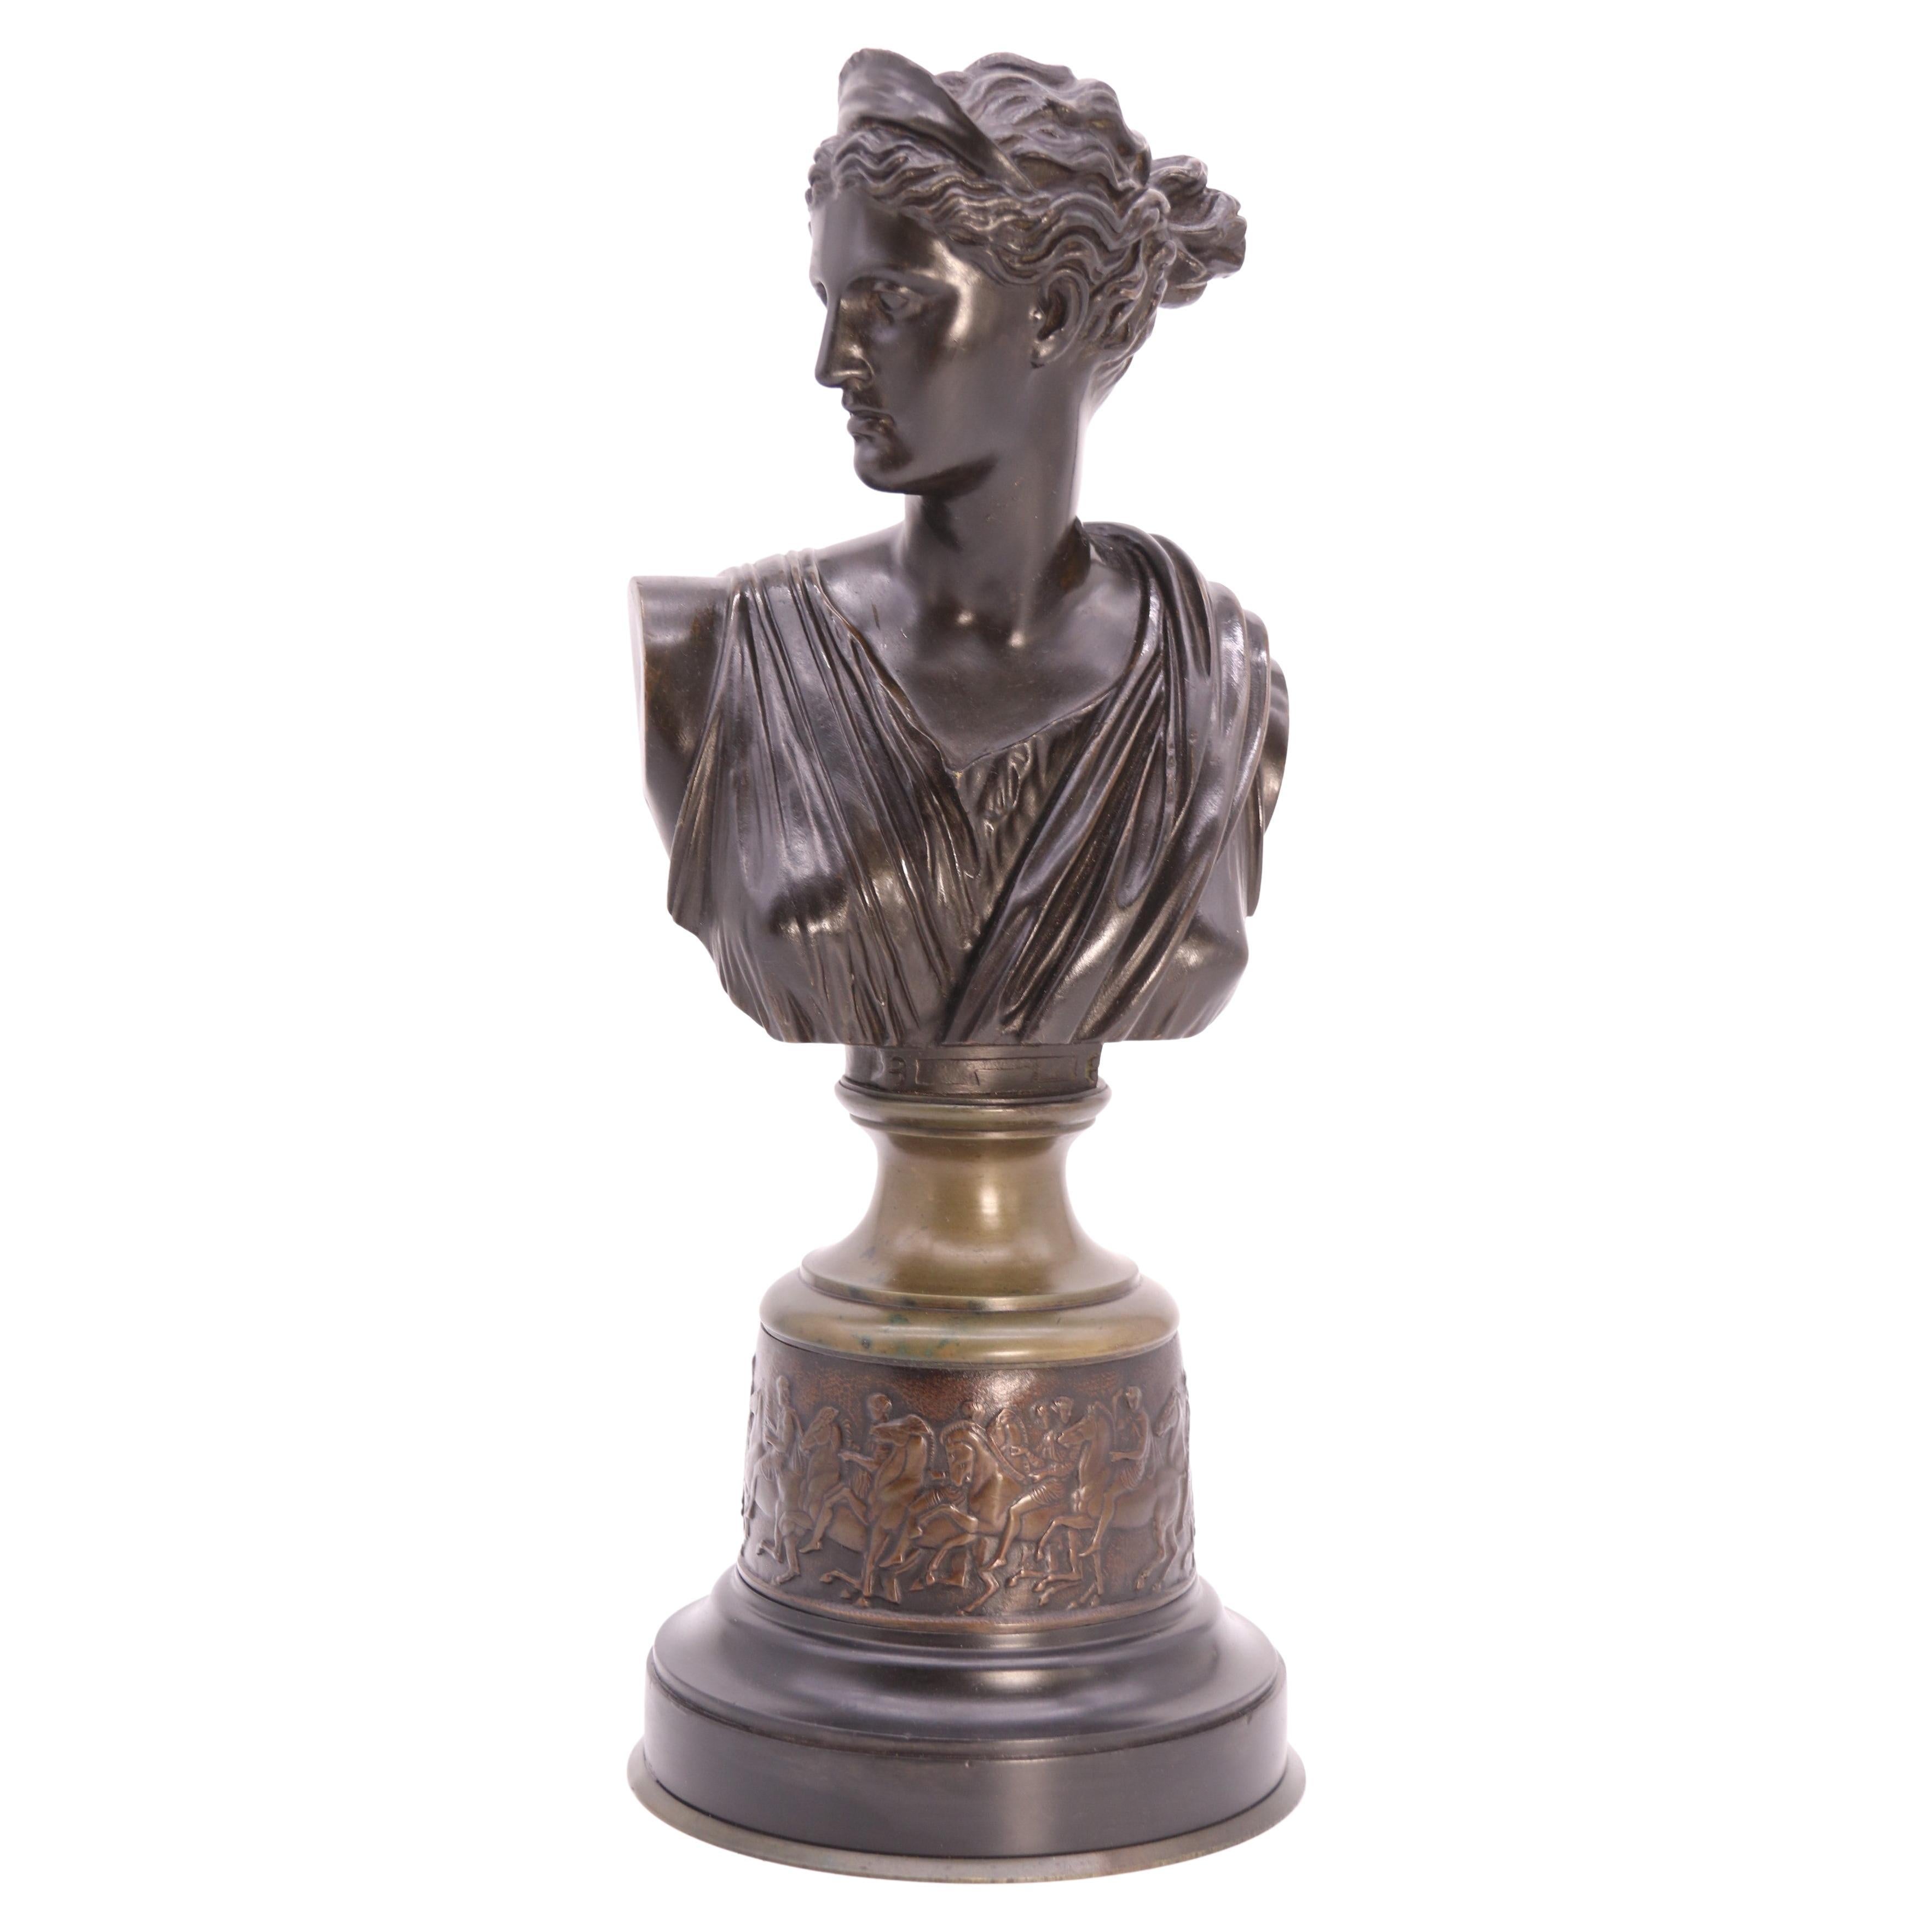 19th century bronze bust of the Greek Goddess Diana the Huntress, circa 1860